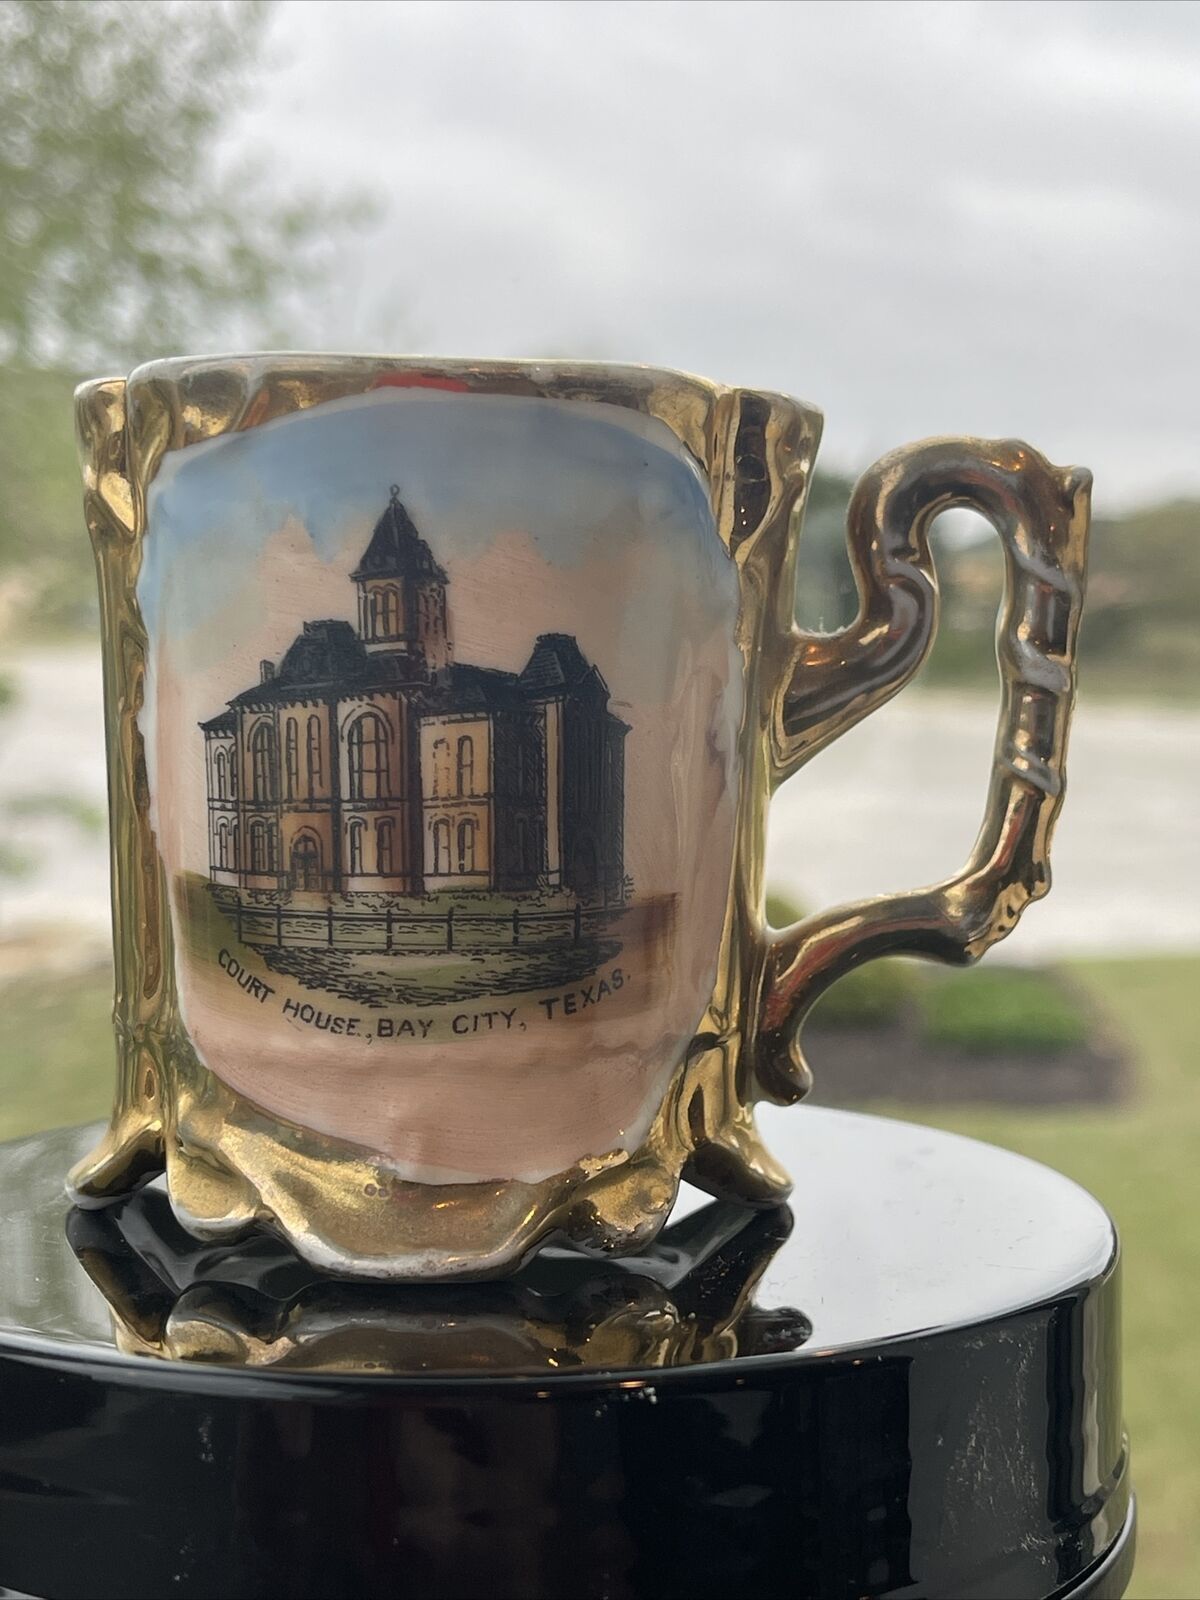 Early 1900s Bay City Texas courthouse souvenir porcelain cup